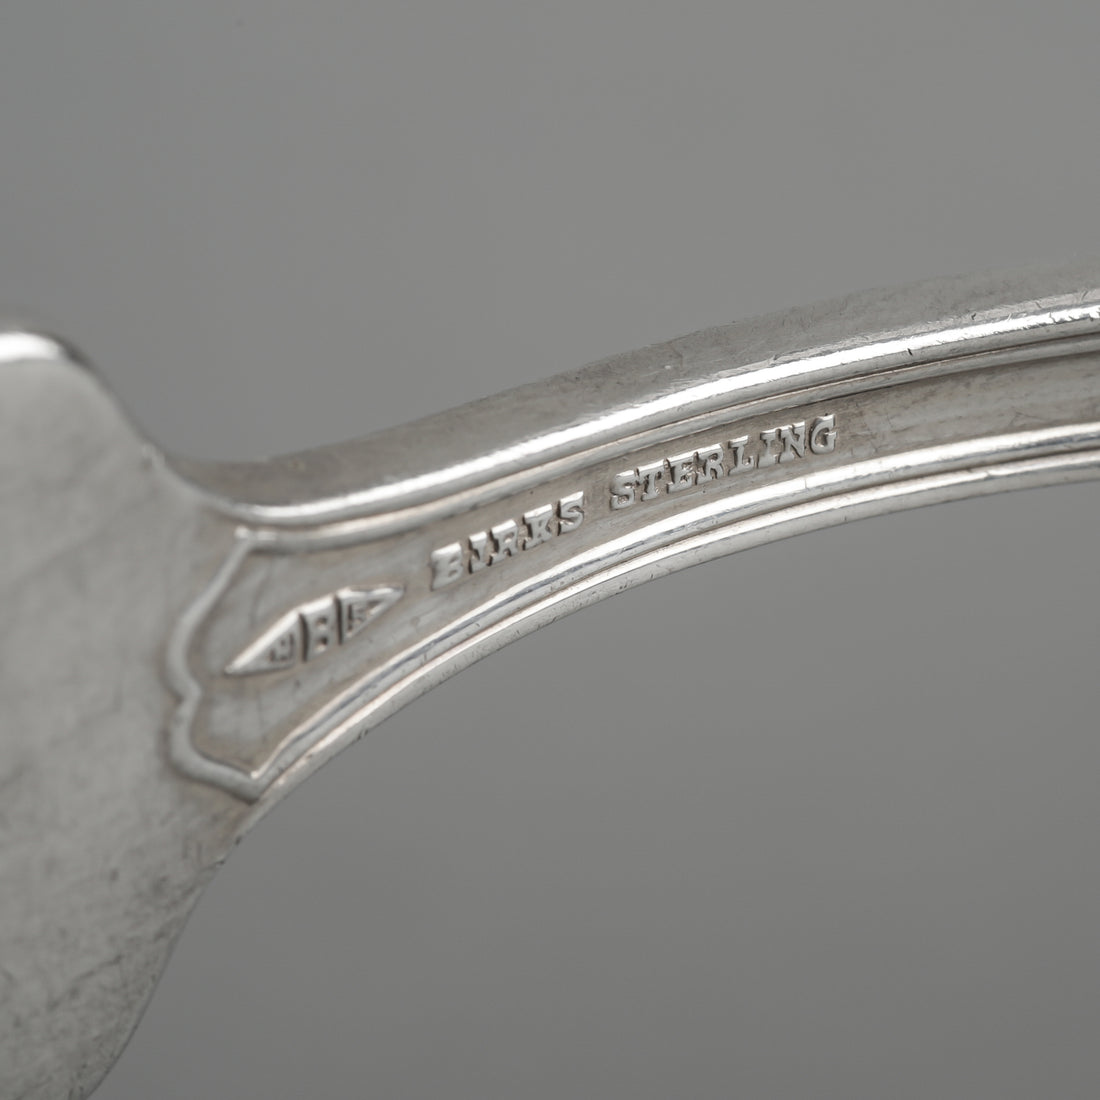 BIRKS Georgian Plain Sterling Silver Flatware - 27 Pieces